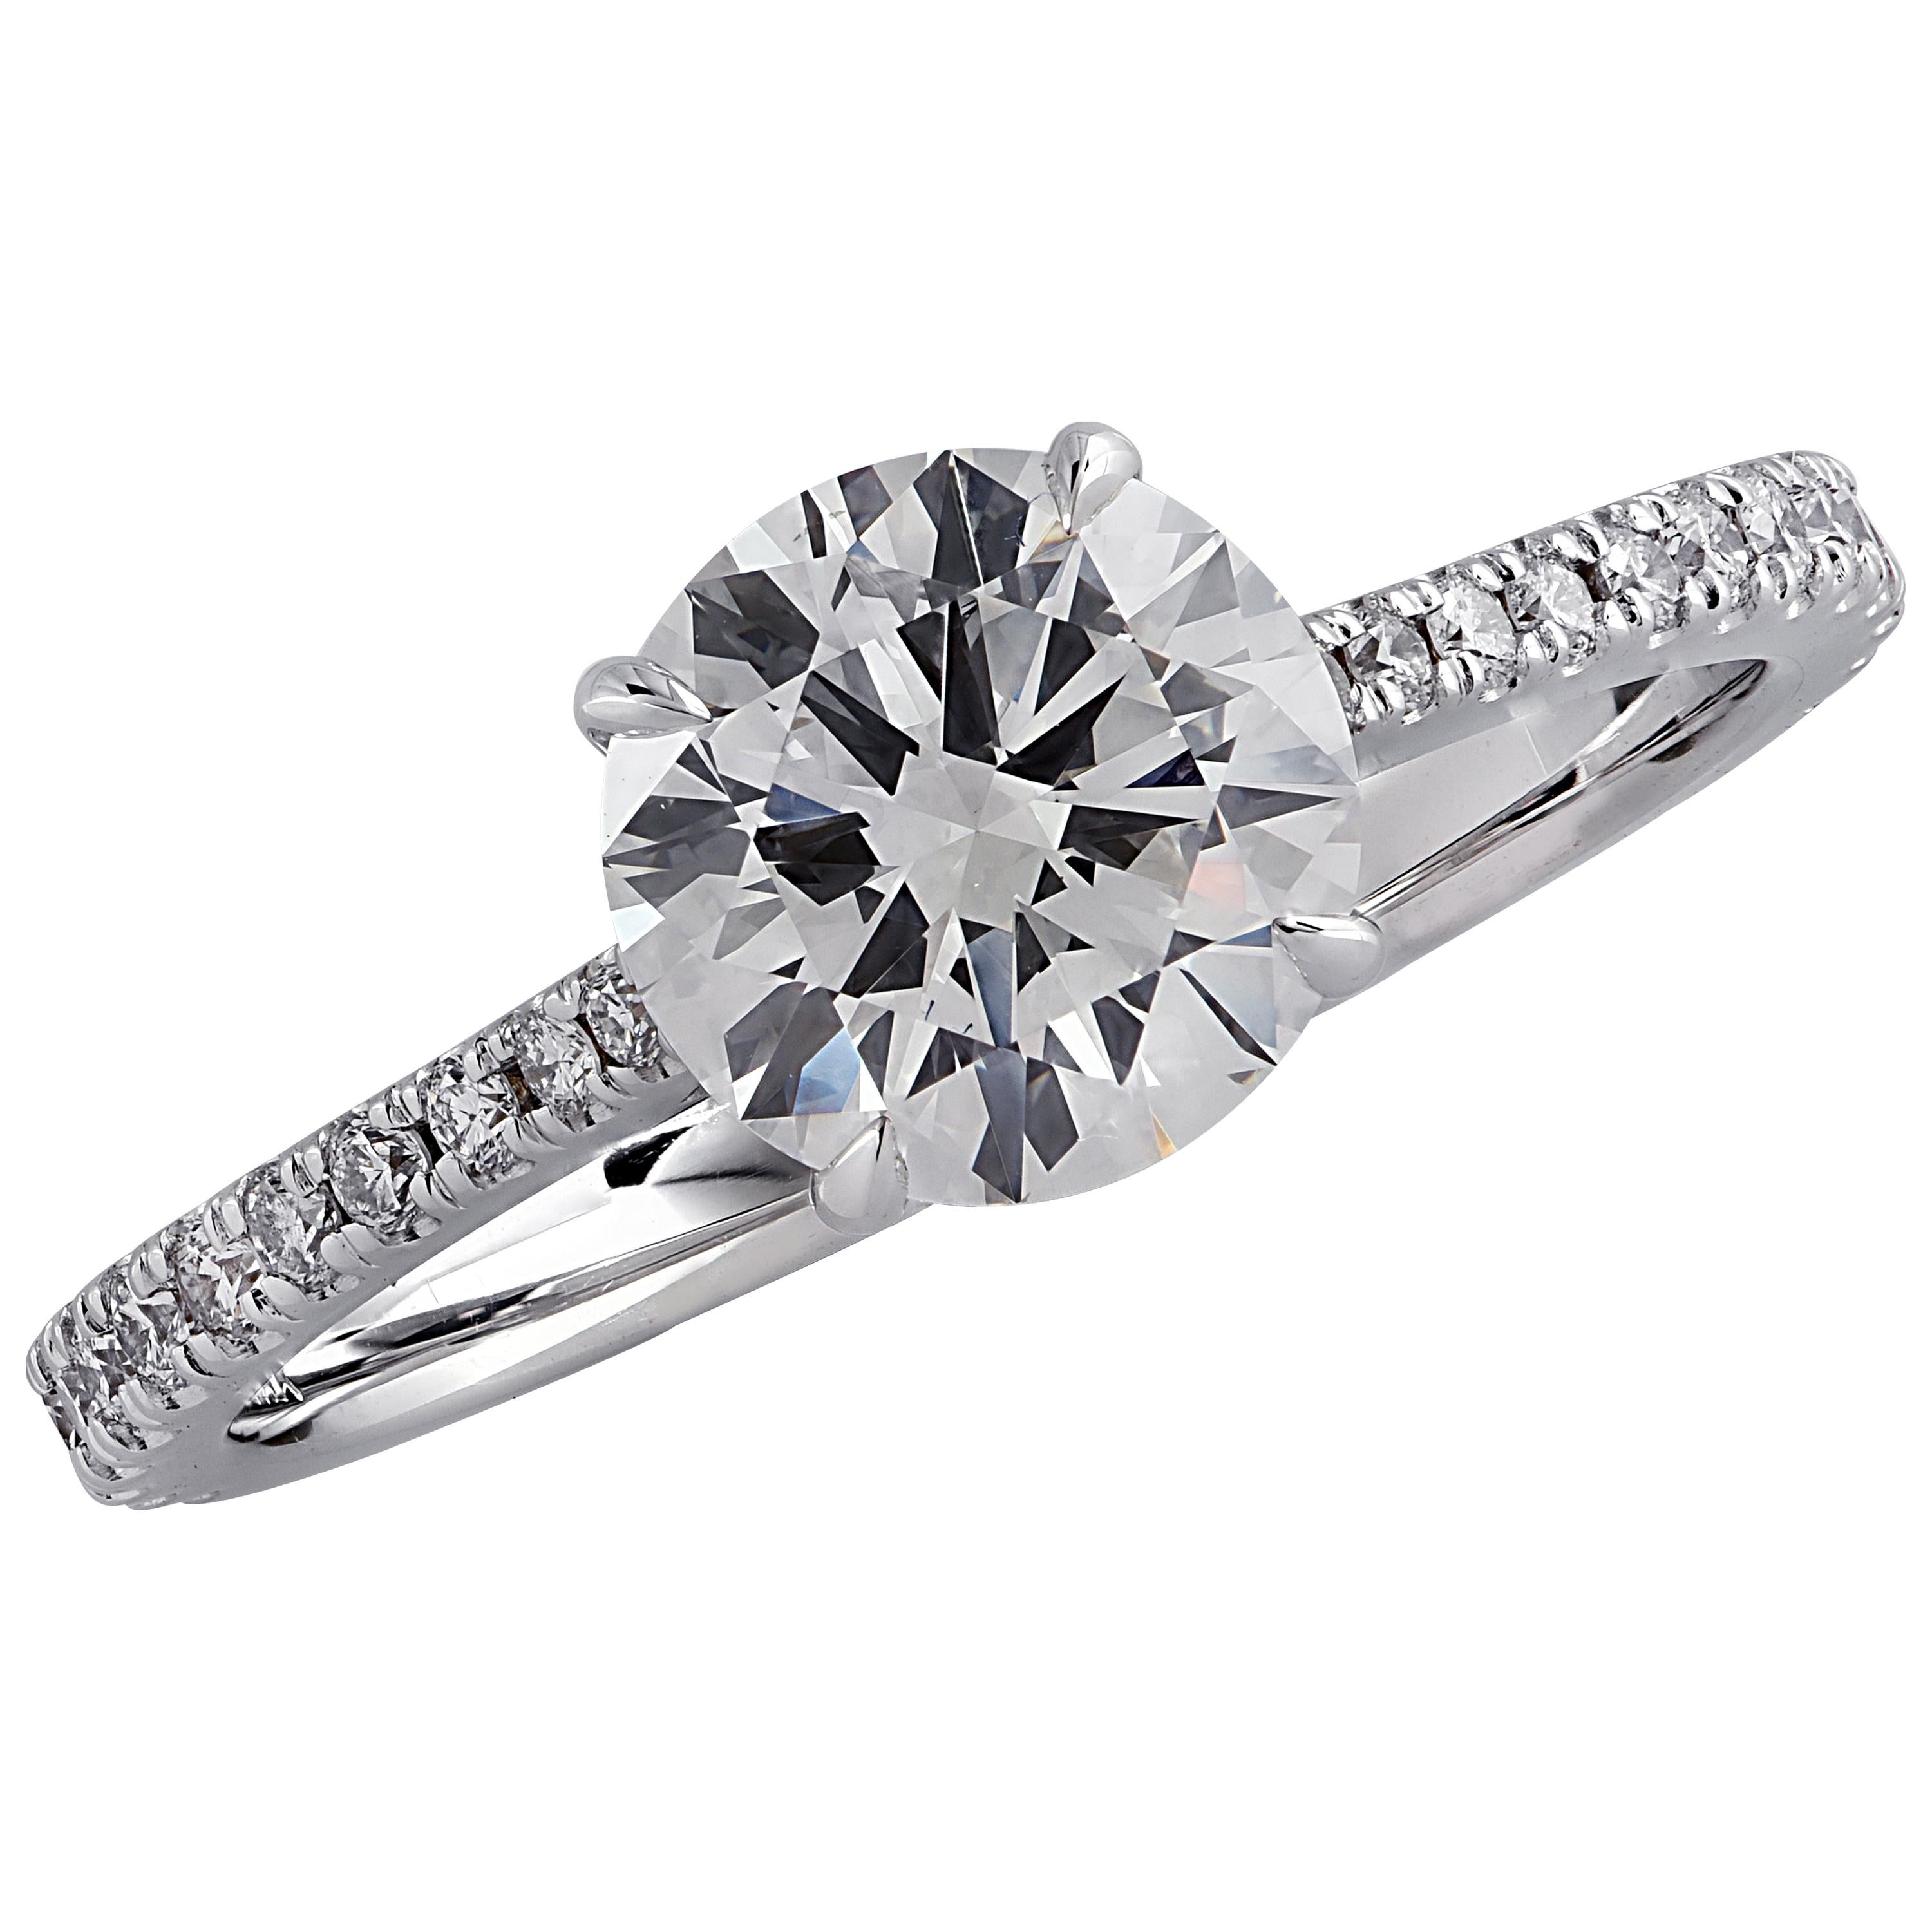 Vivid Diamonds GIA Certified 1.38 Carat Diamond Engagement Ring